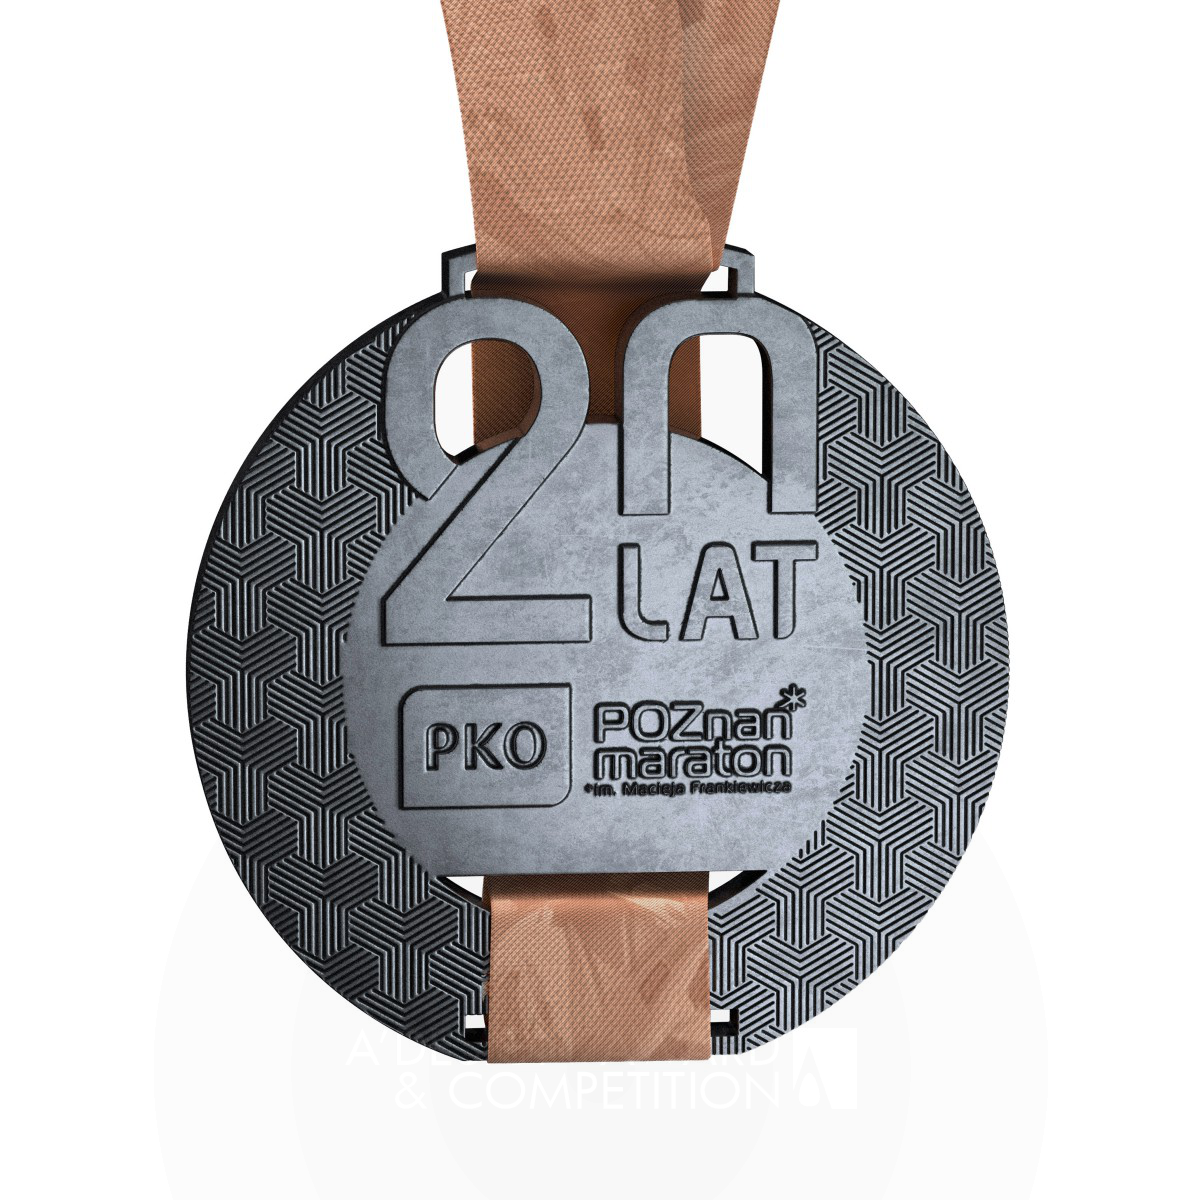 Poznan Marathon Medal